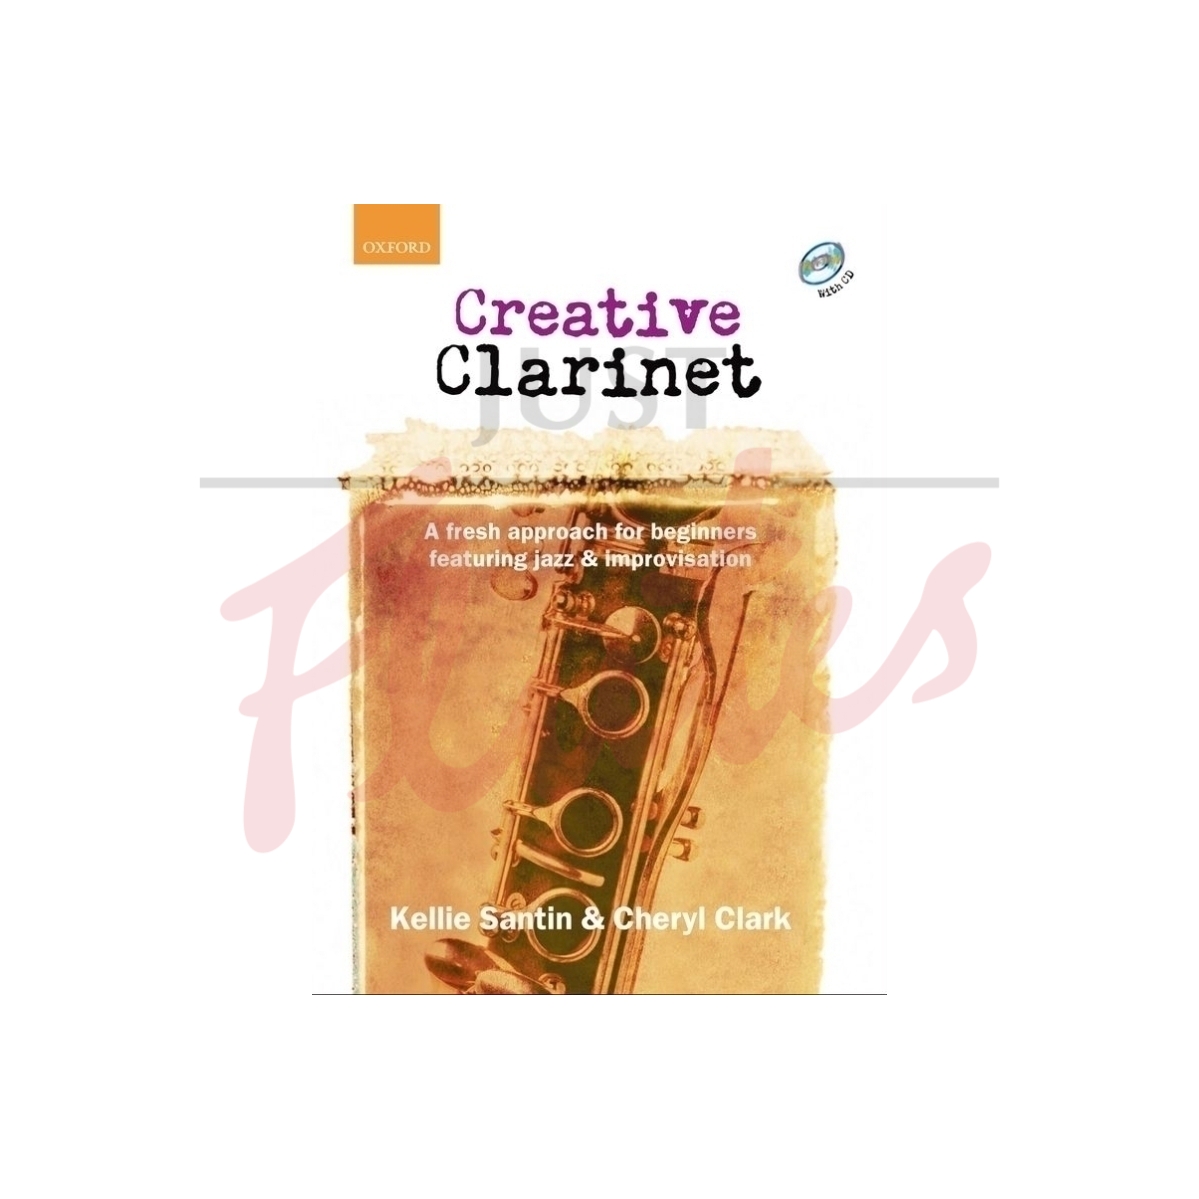 Creative Clarinet